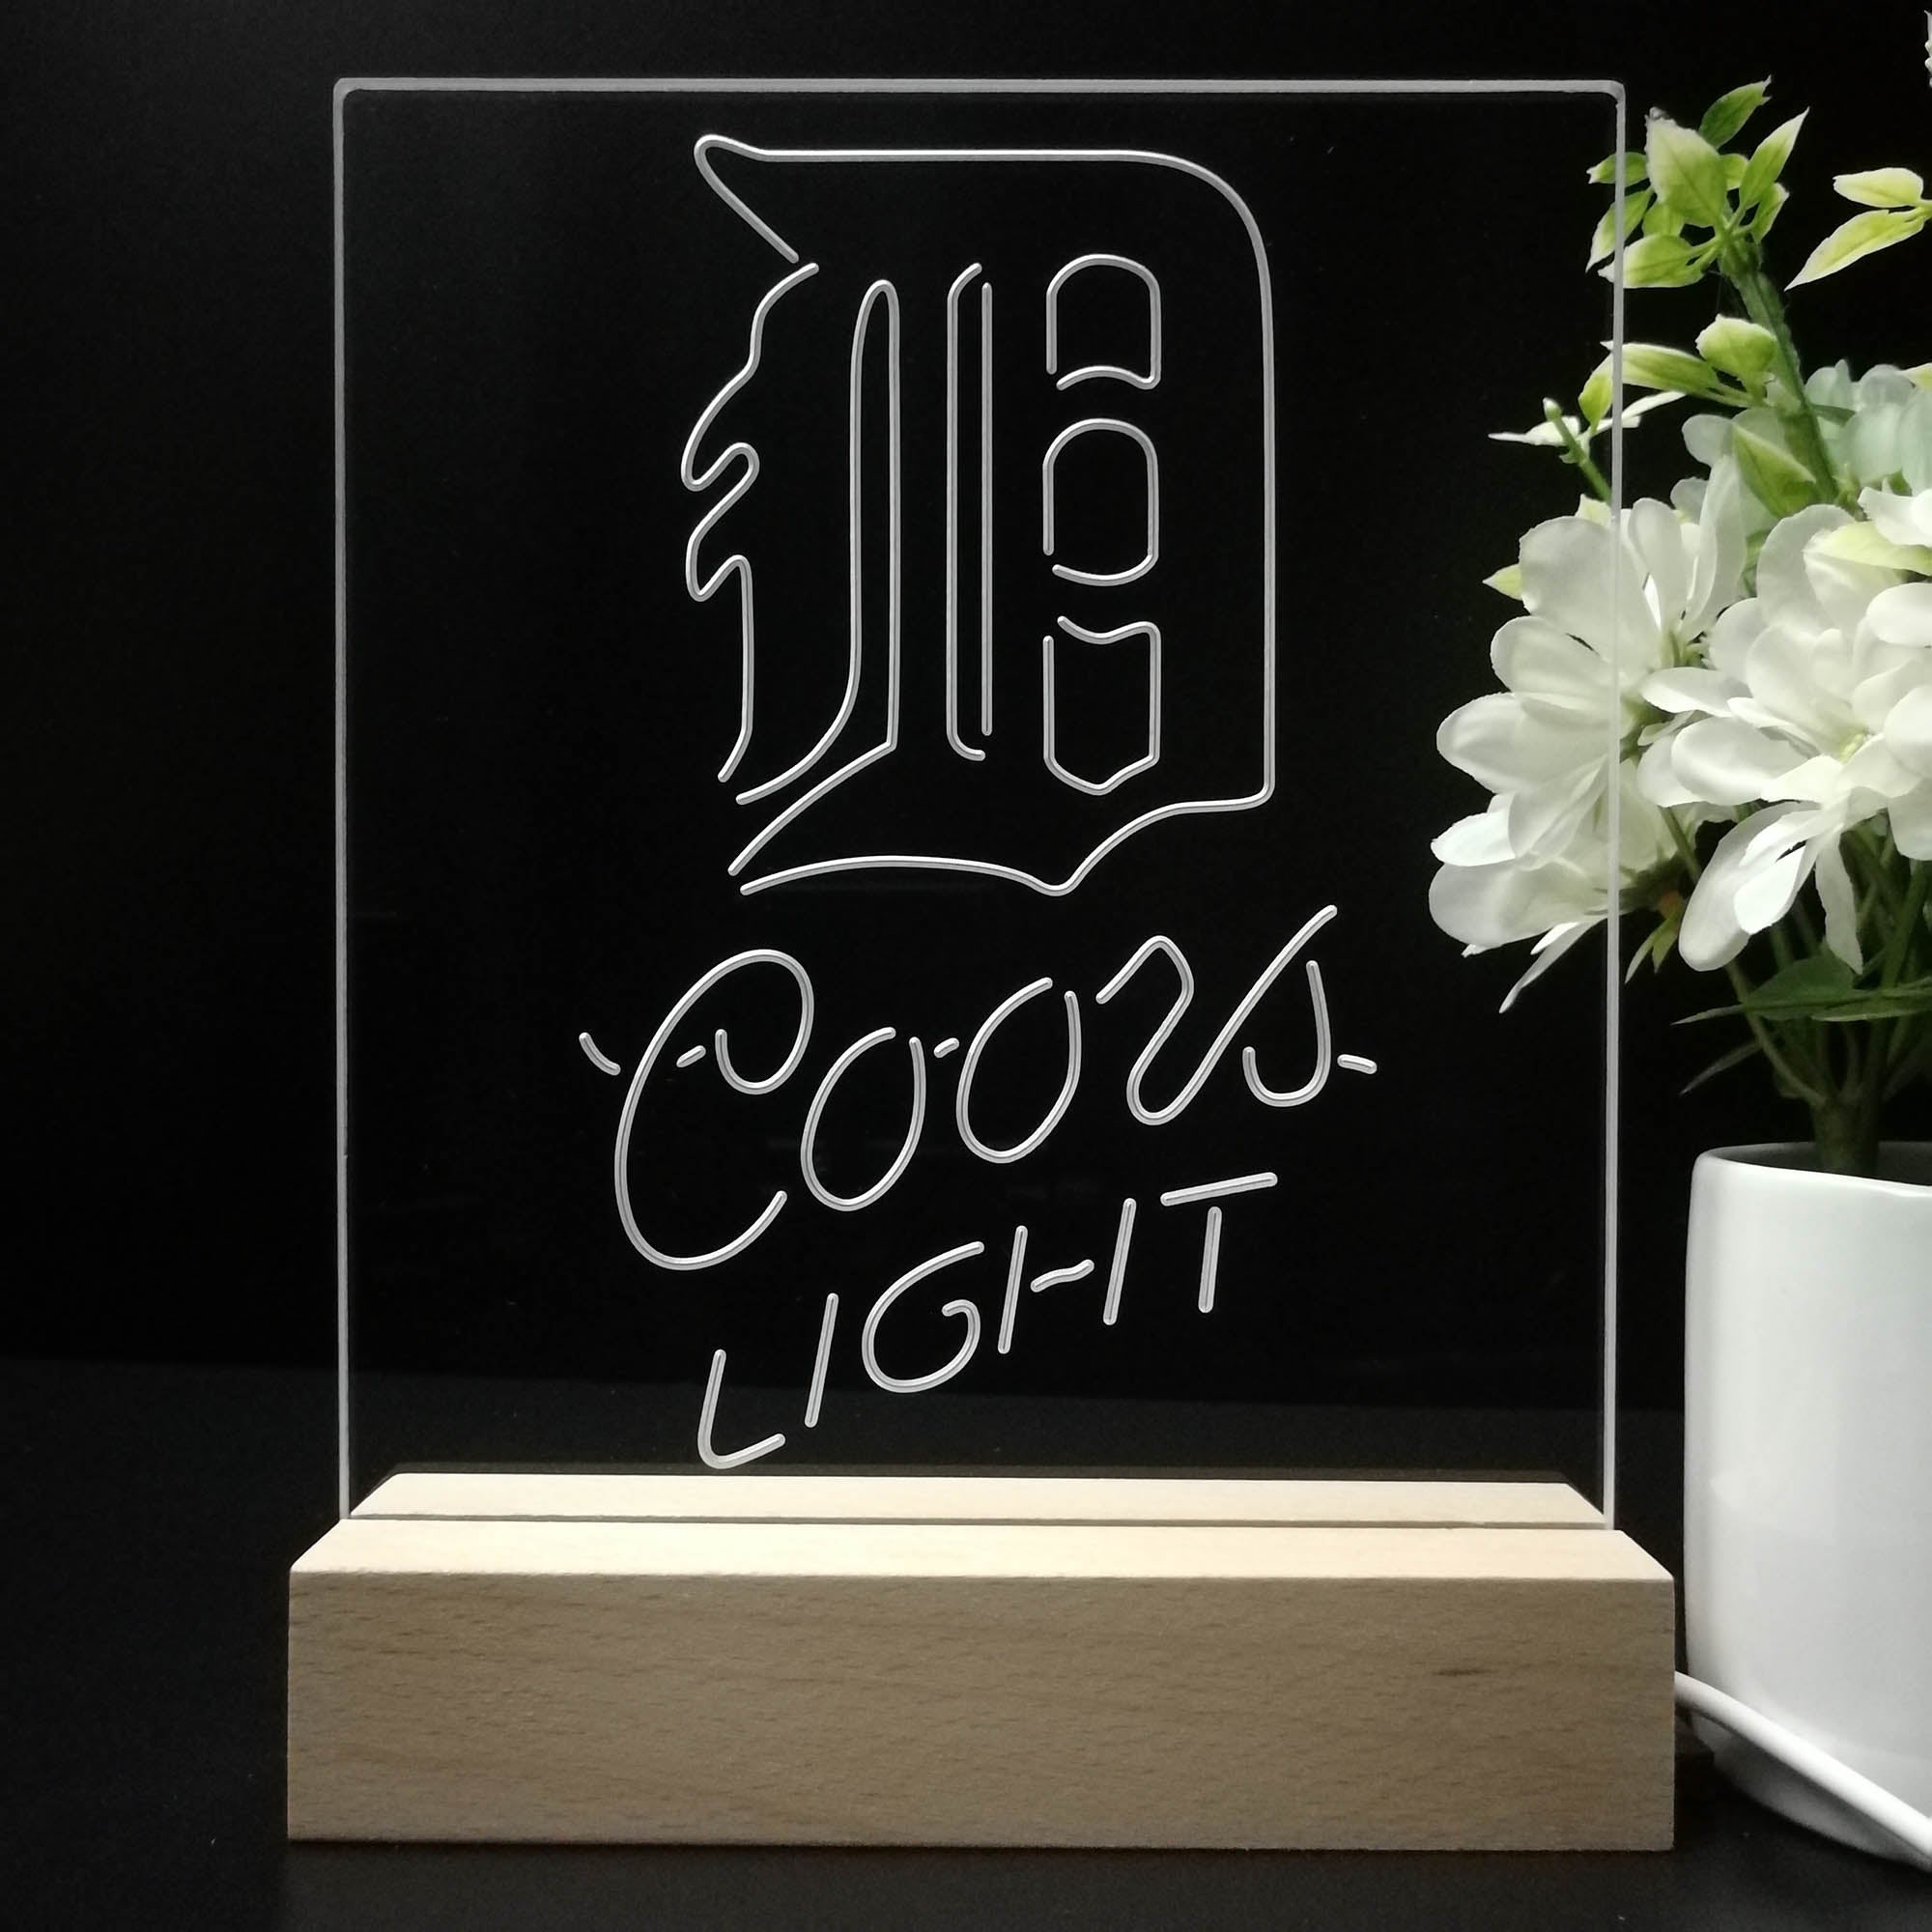 Detroit Tigers Coors Light 3D LED Optical Illusion Sport Team Night Light